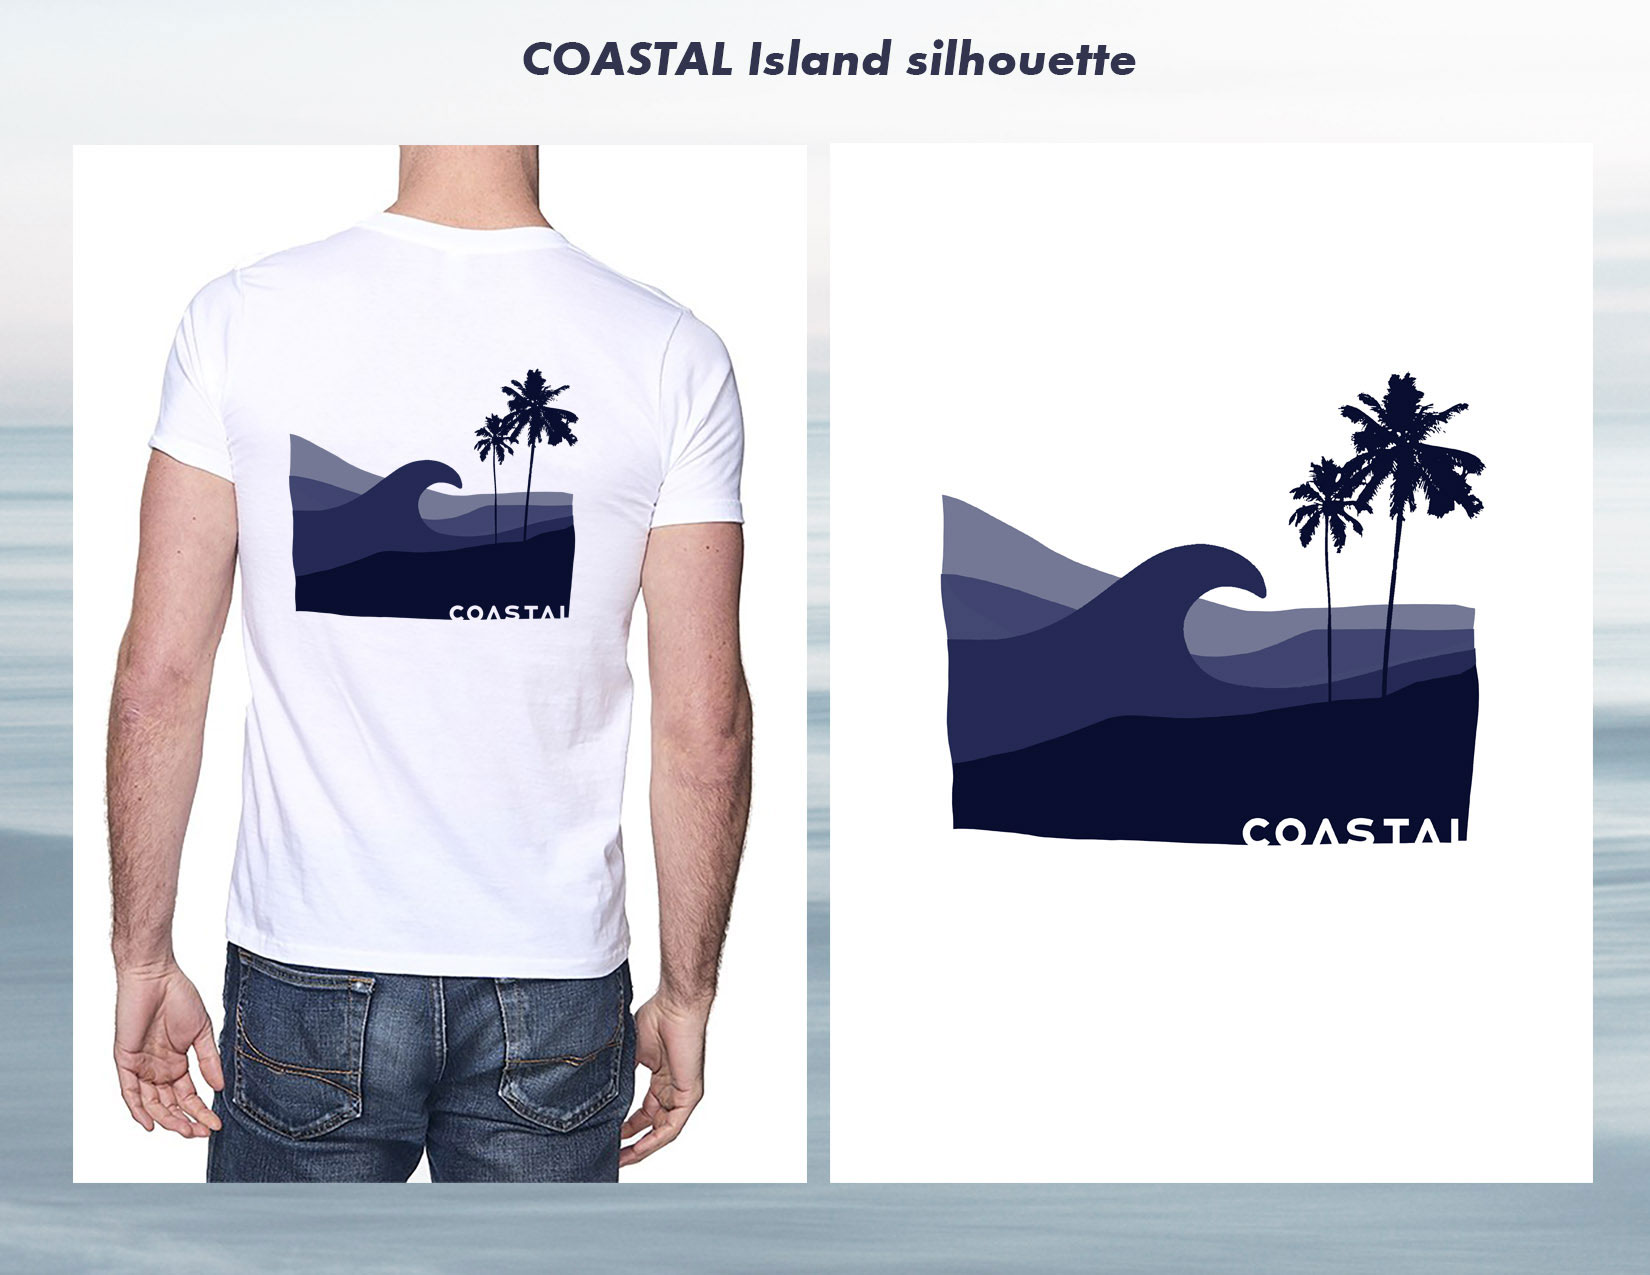 Coastal-Island-silhouette-mock